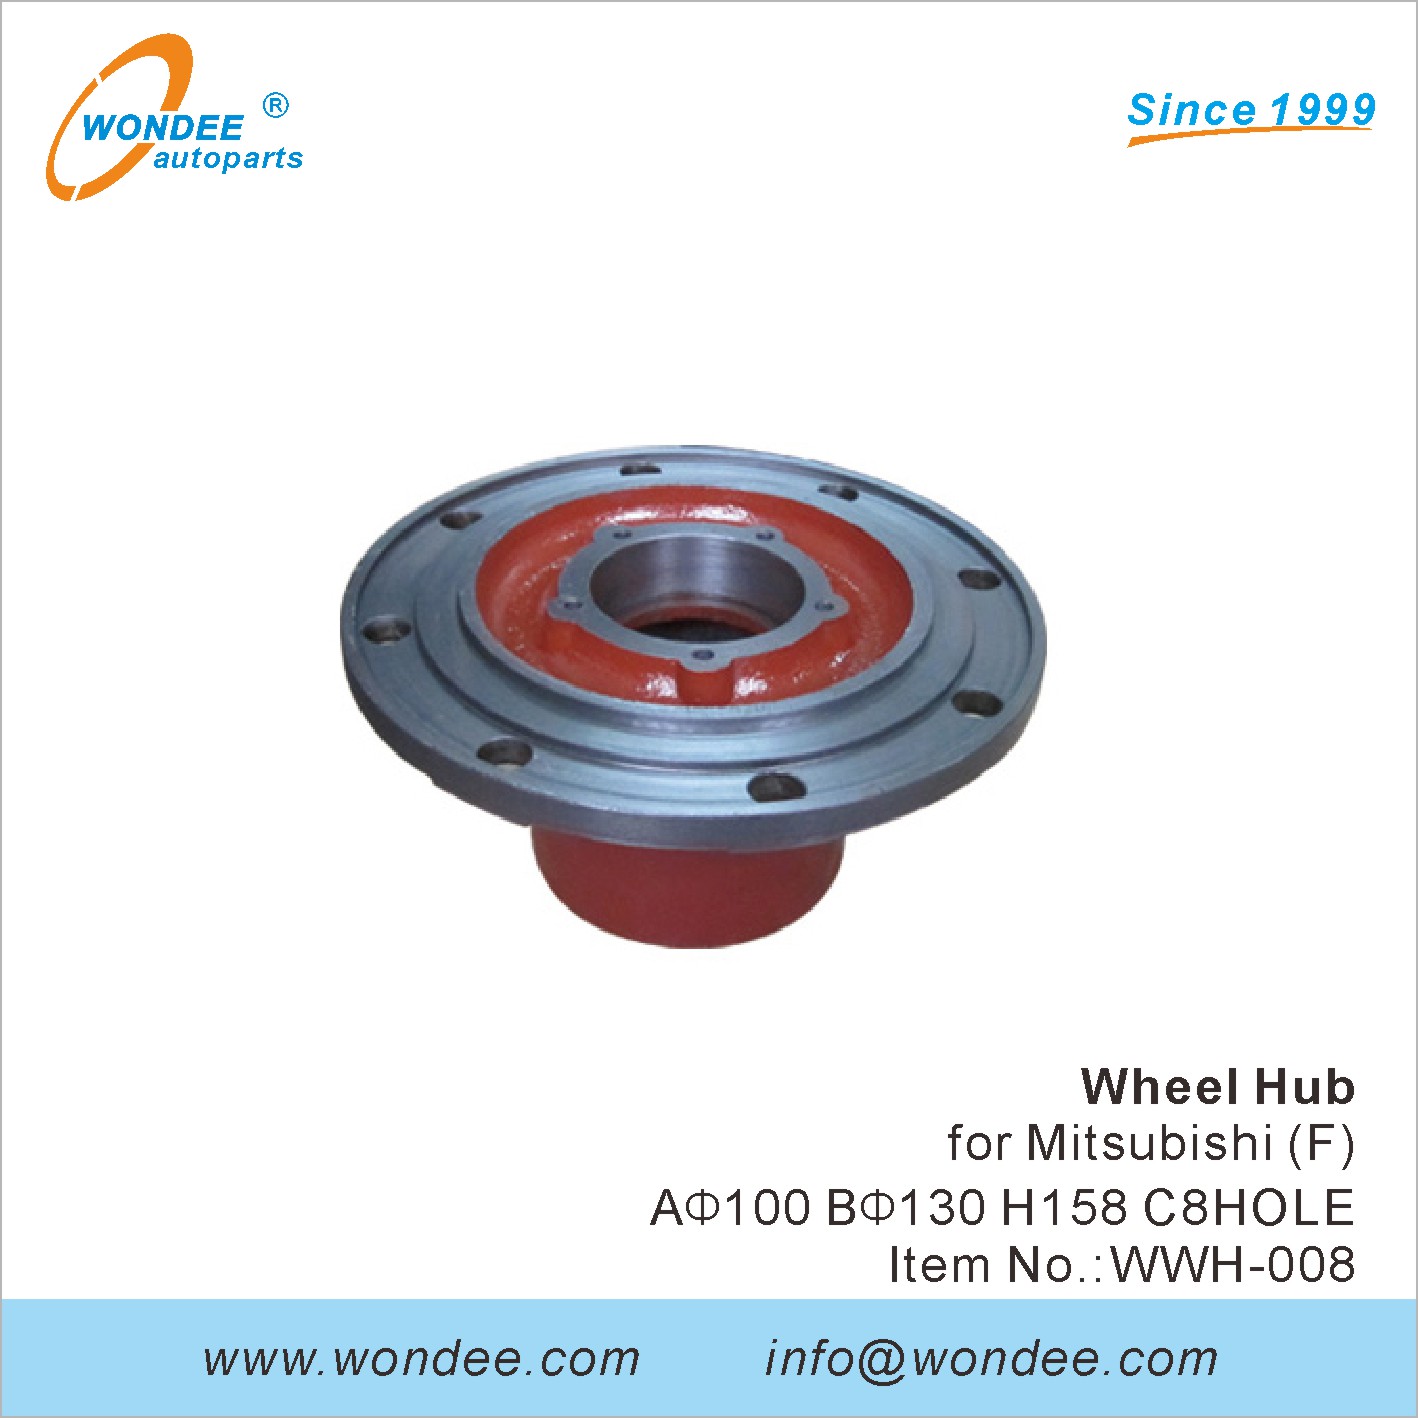 WONDEE wheel hub (8)